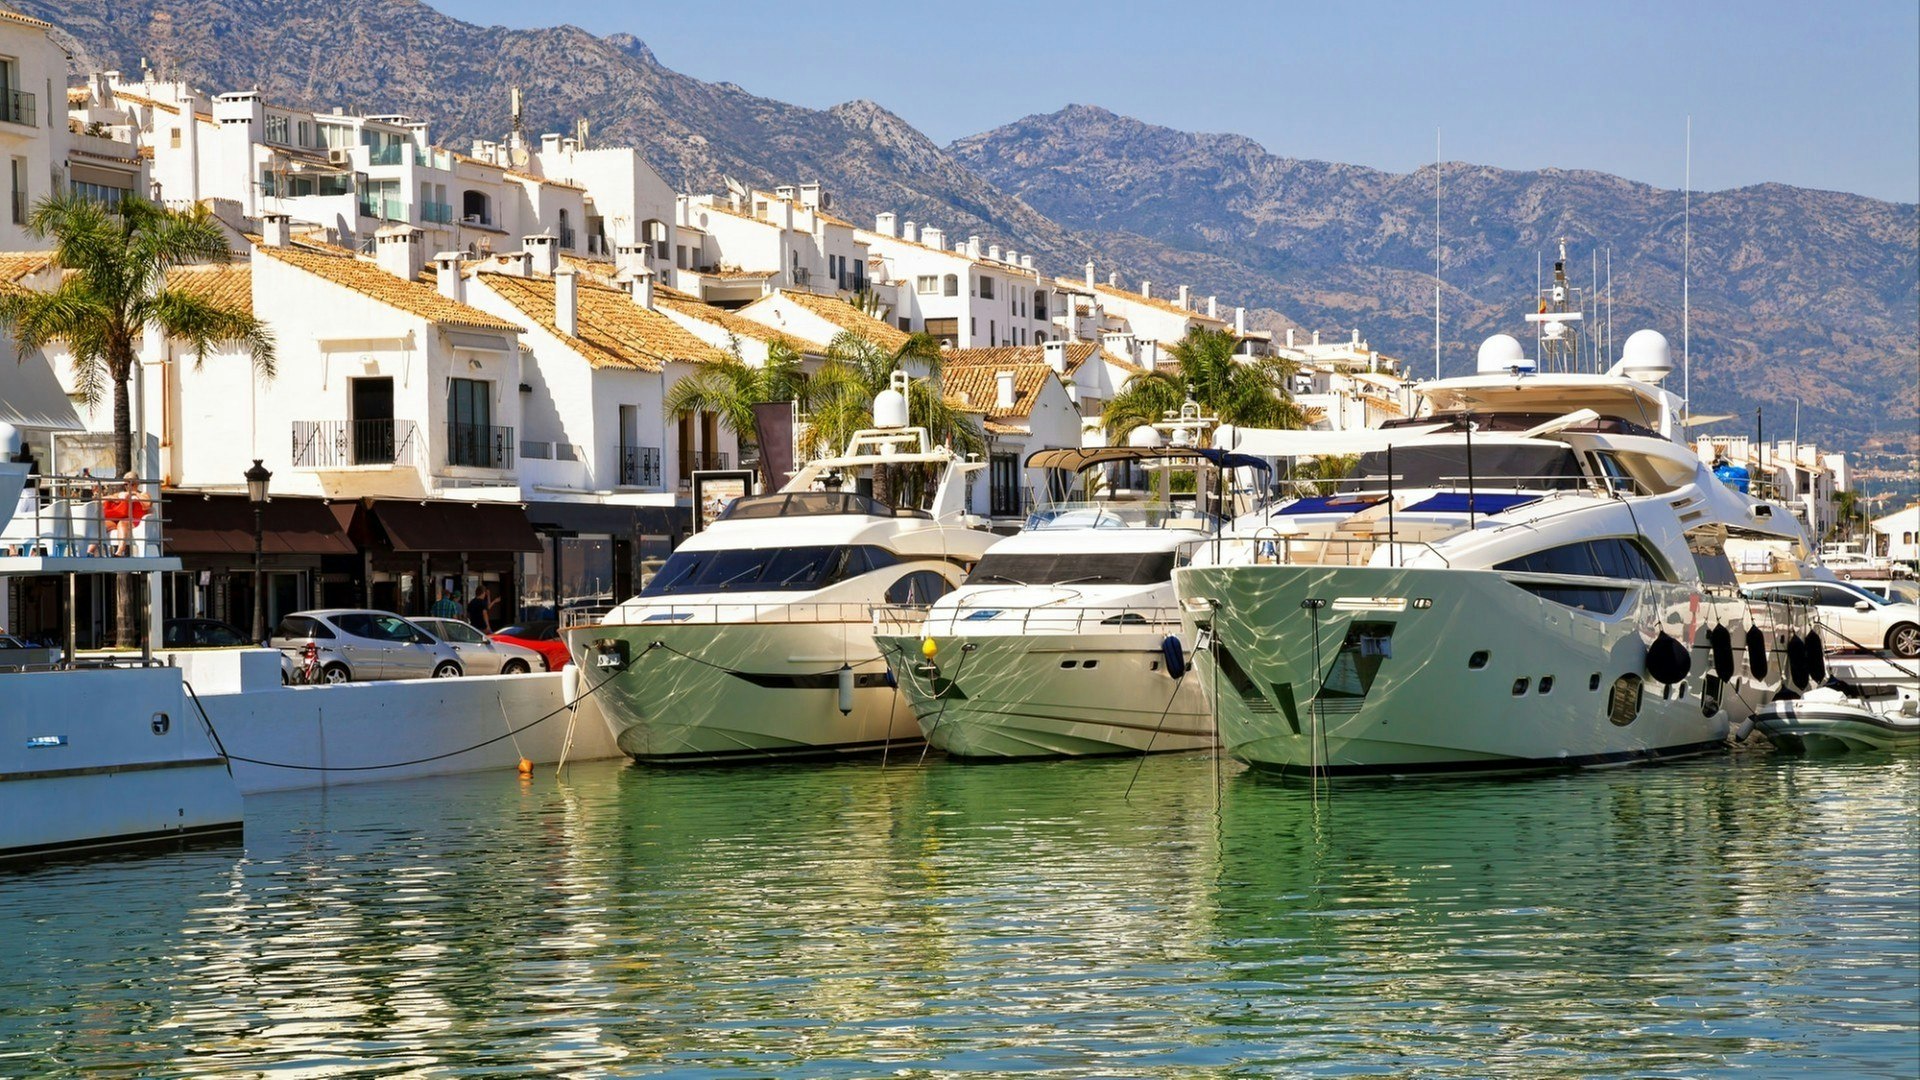 Luxury yachts in Puerto Banus, the marina of Marbella, Spain.